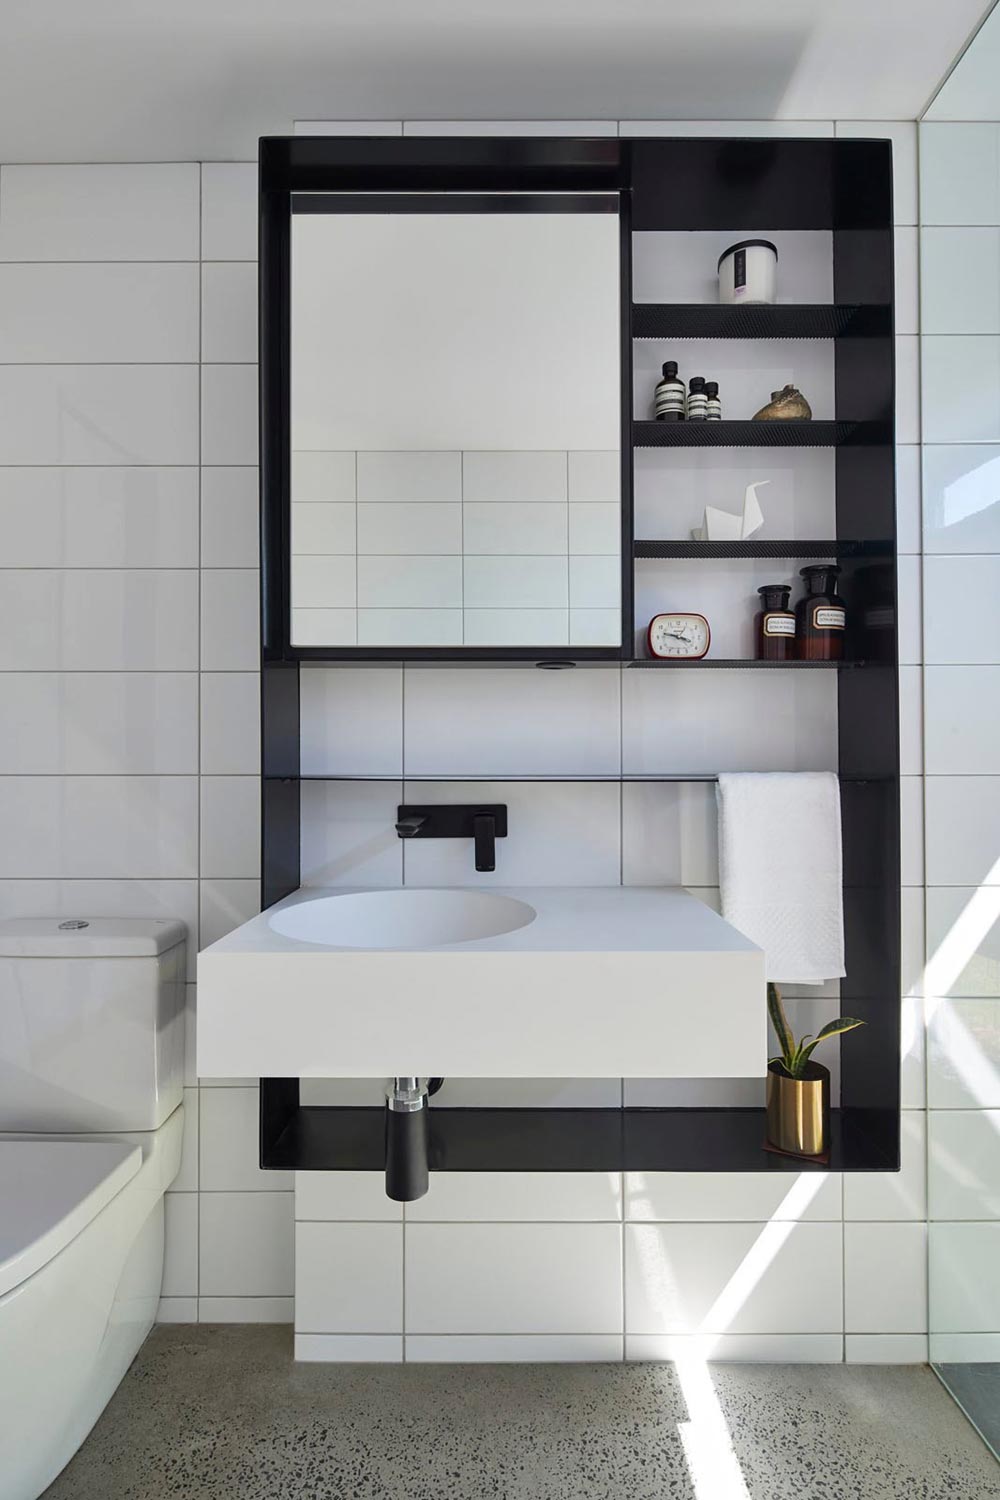 Multi generational home bathroom design